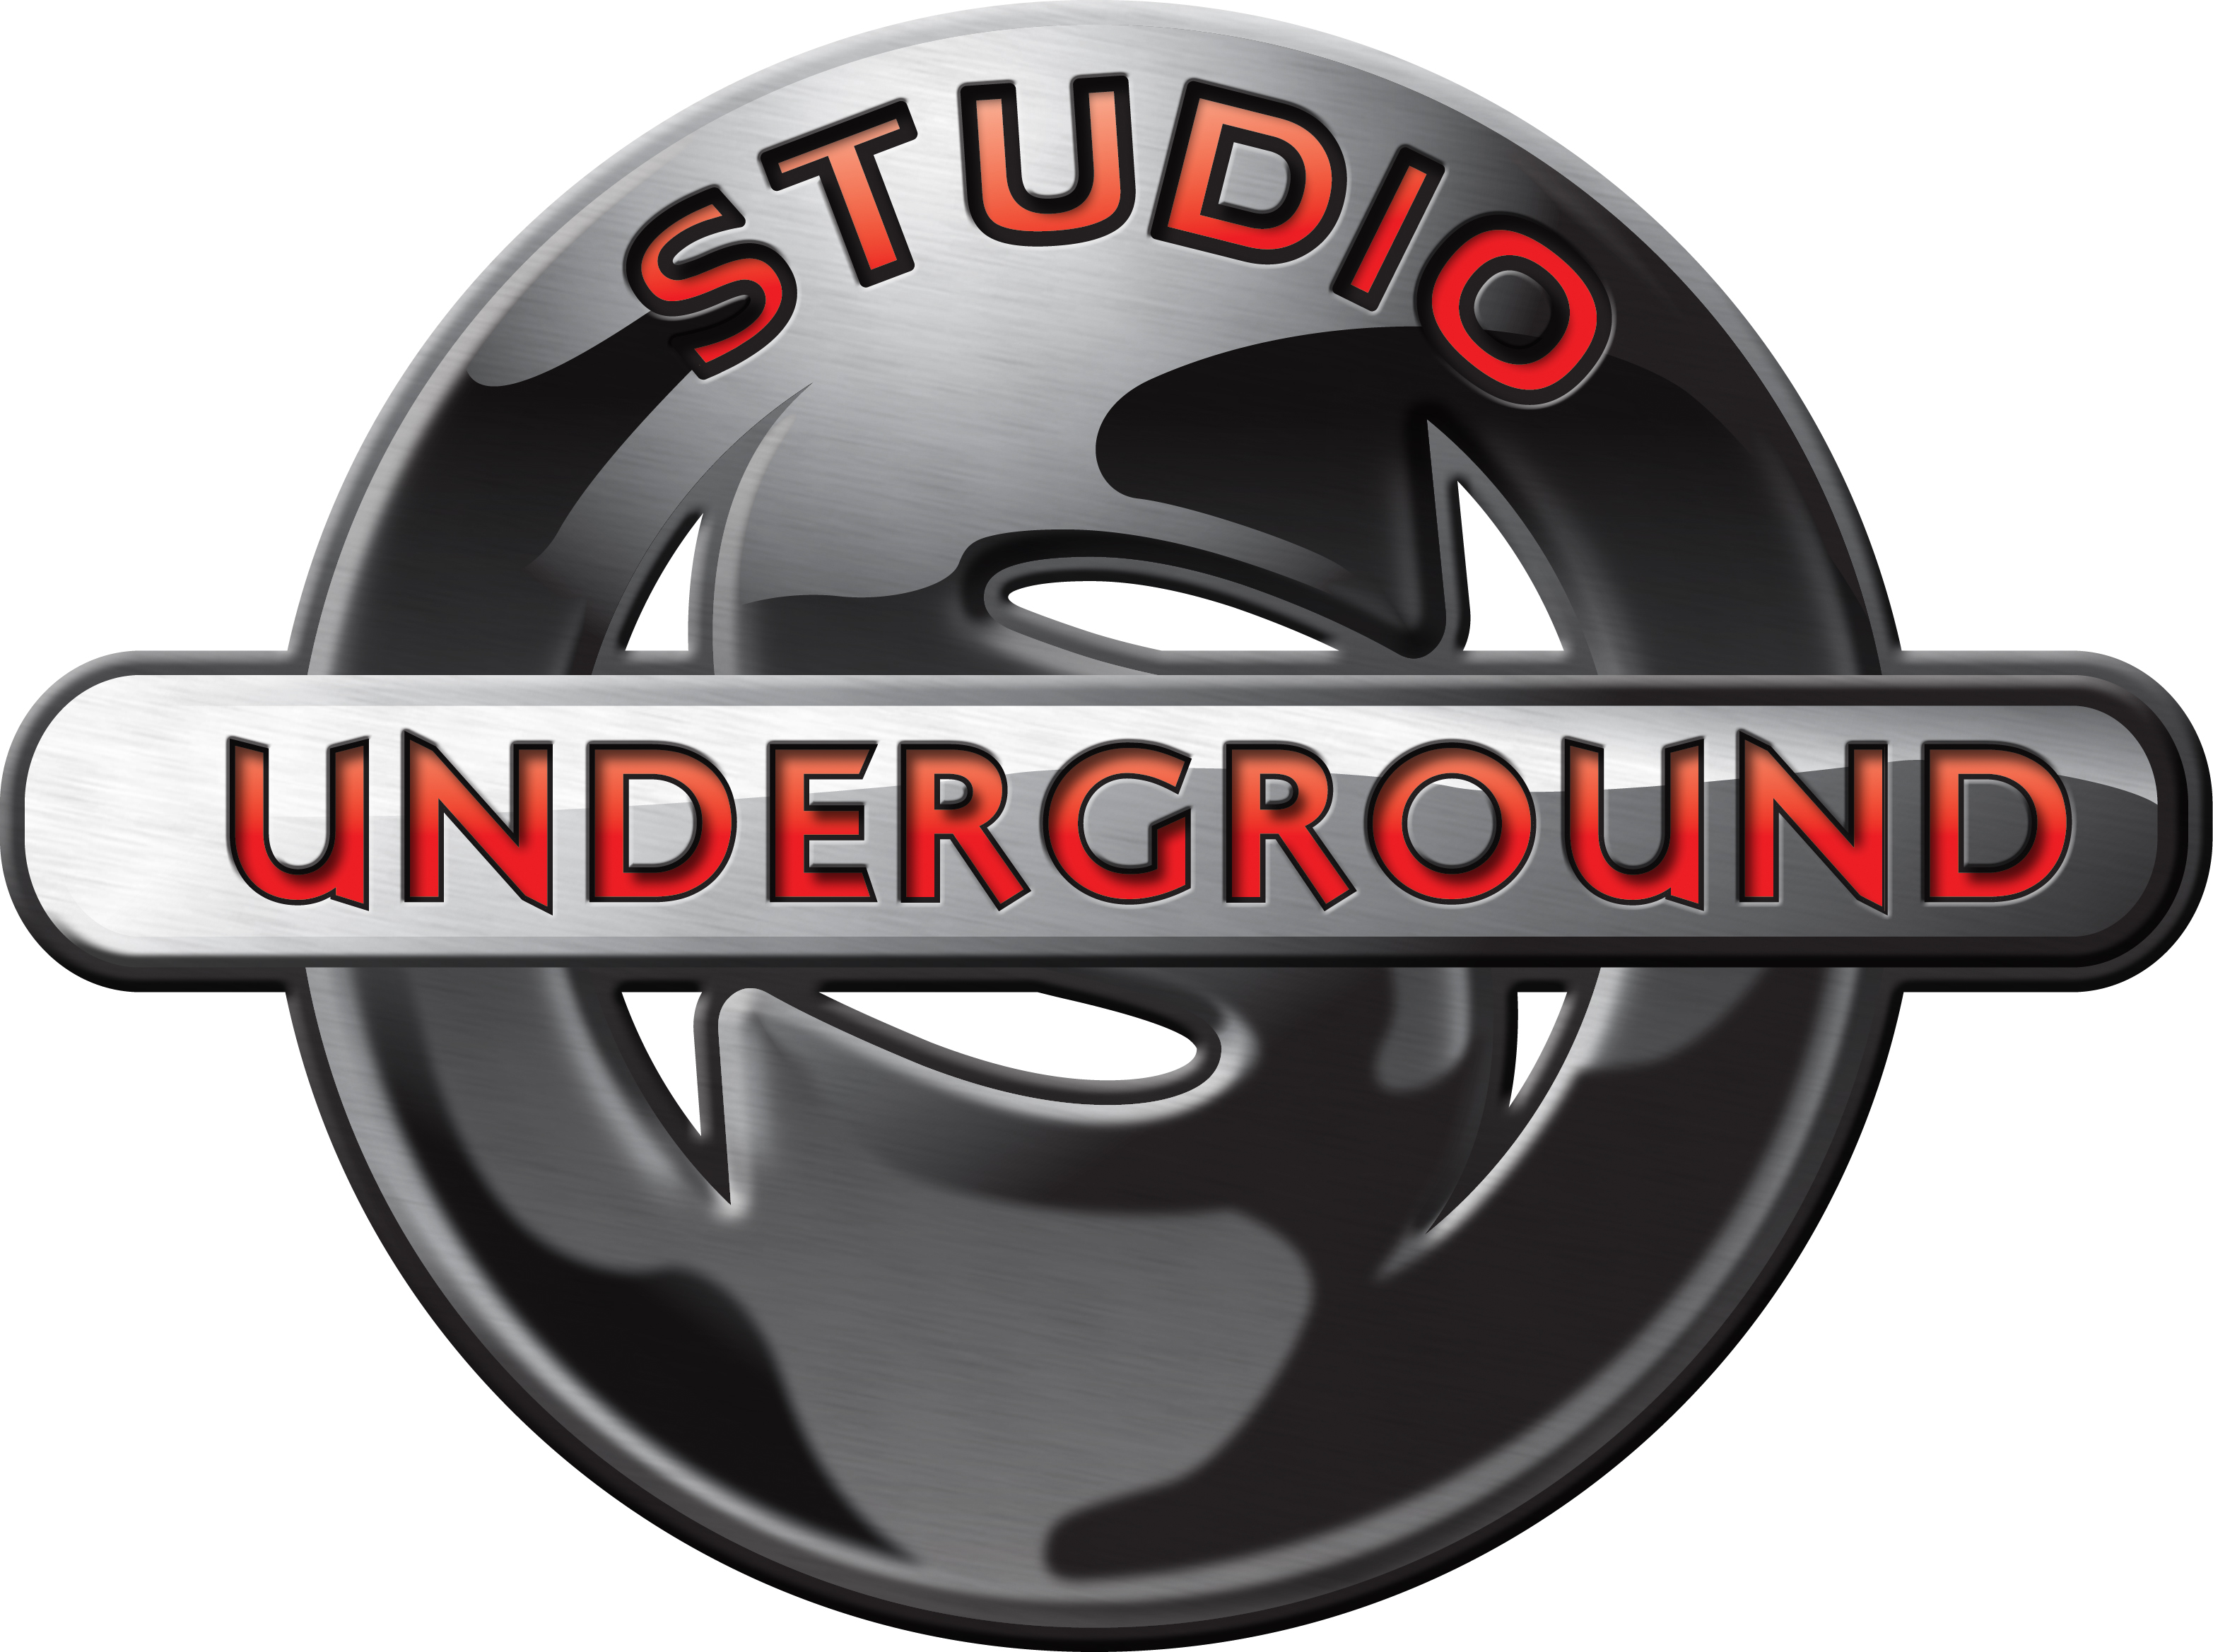 Studio Underground